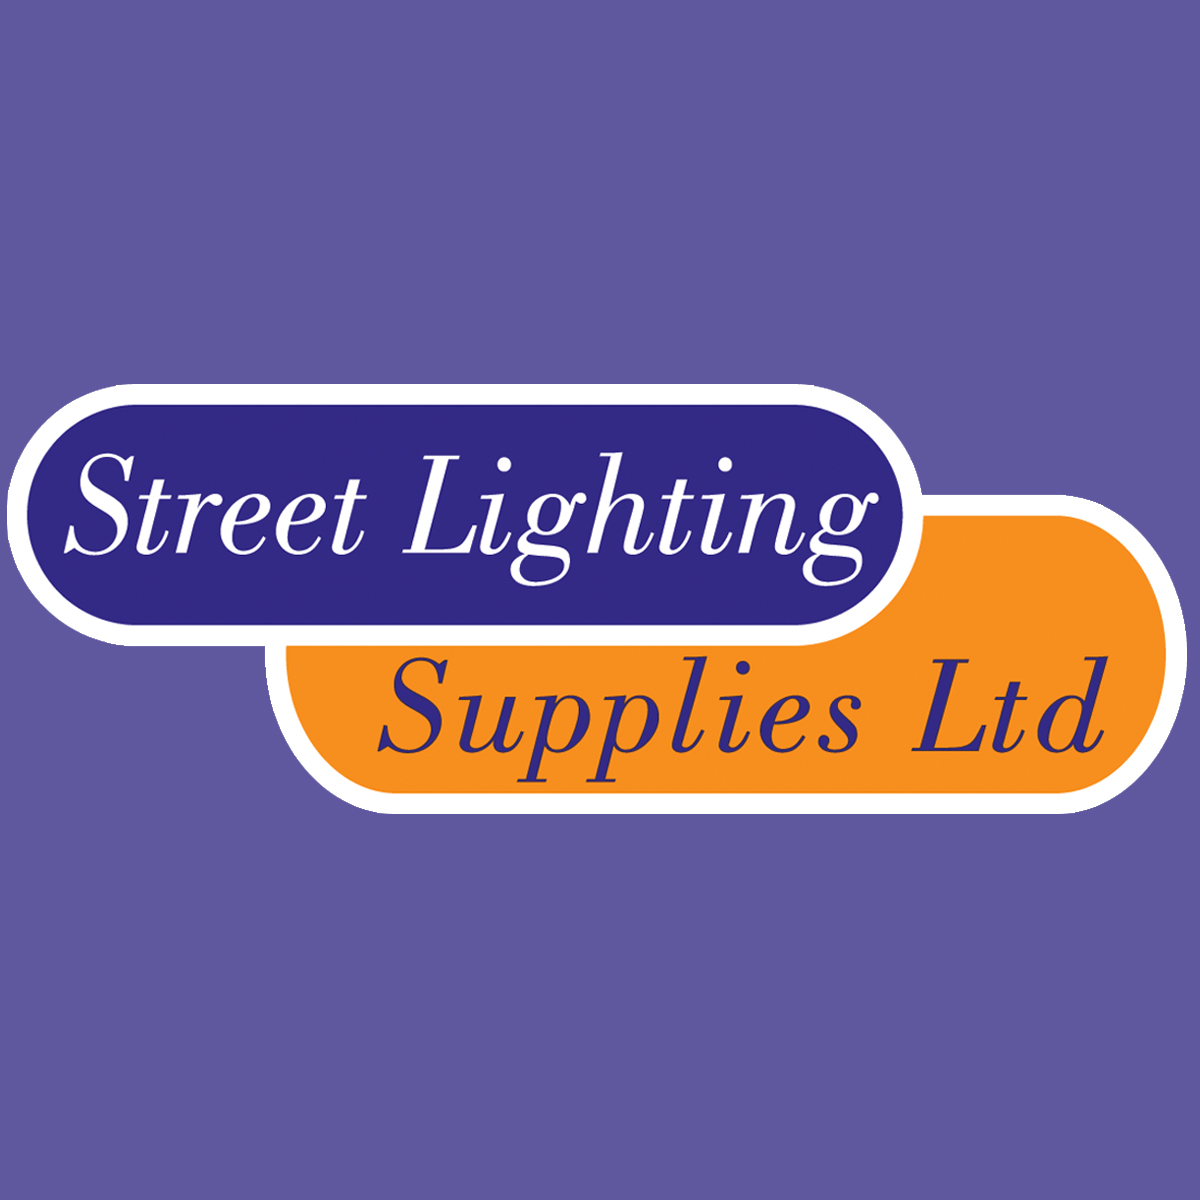 Street Lighting Supplies Ltd